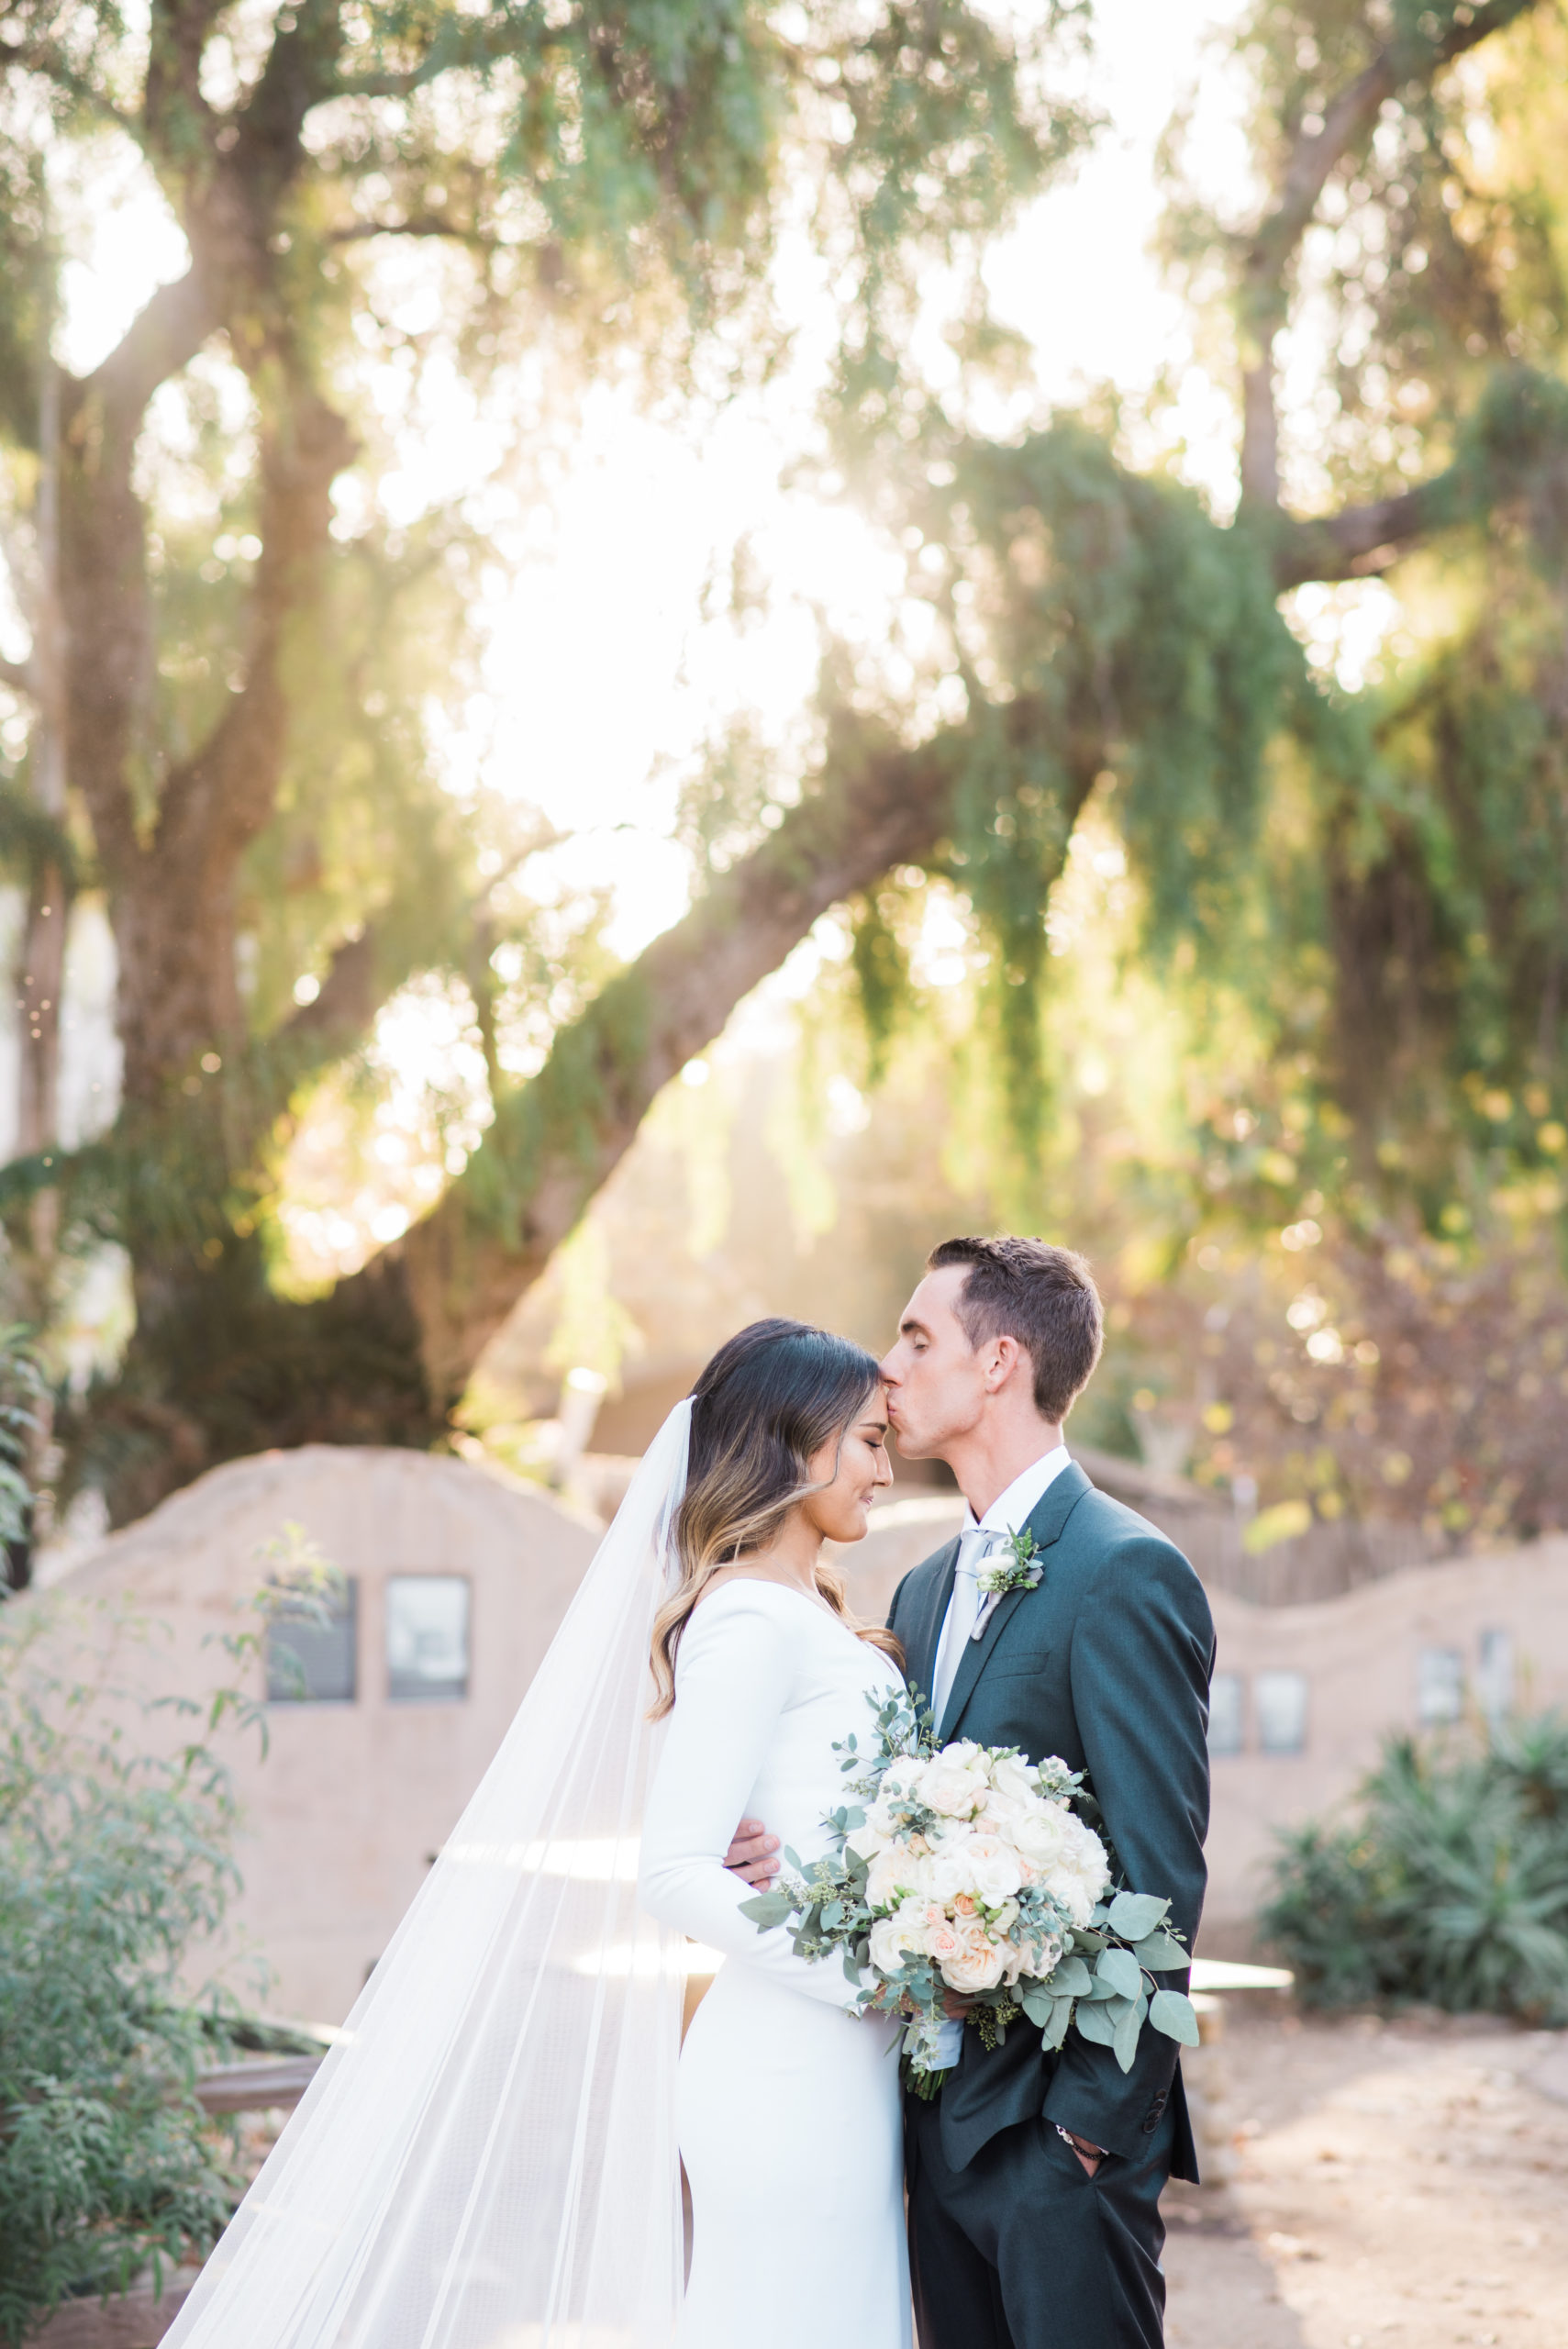 Groom kisses bride's forehead in their garden wedding venue in Orange County, CA.